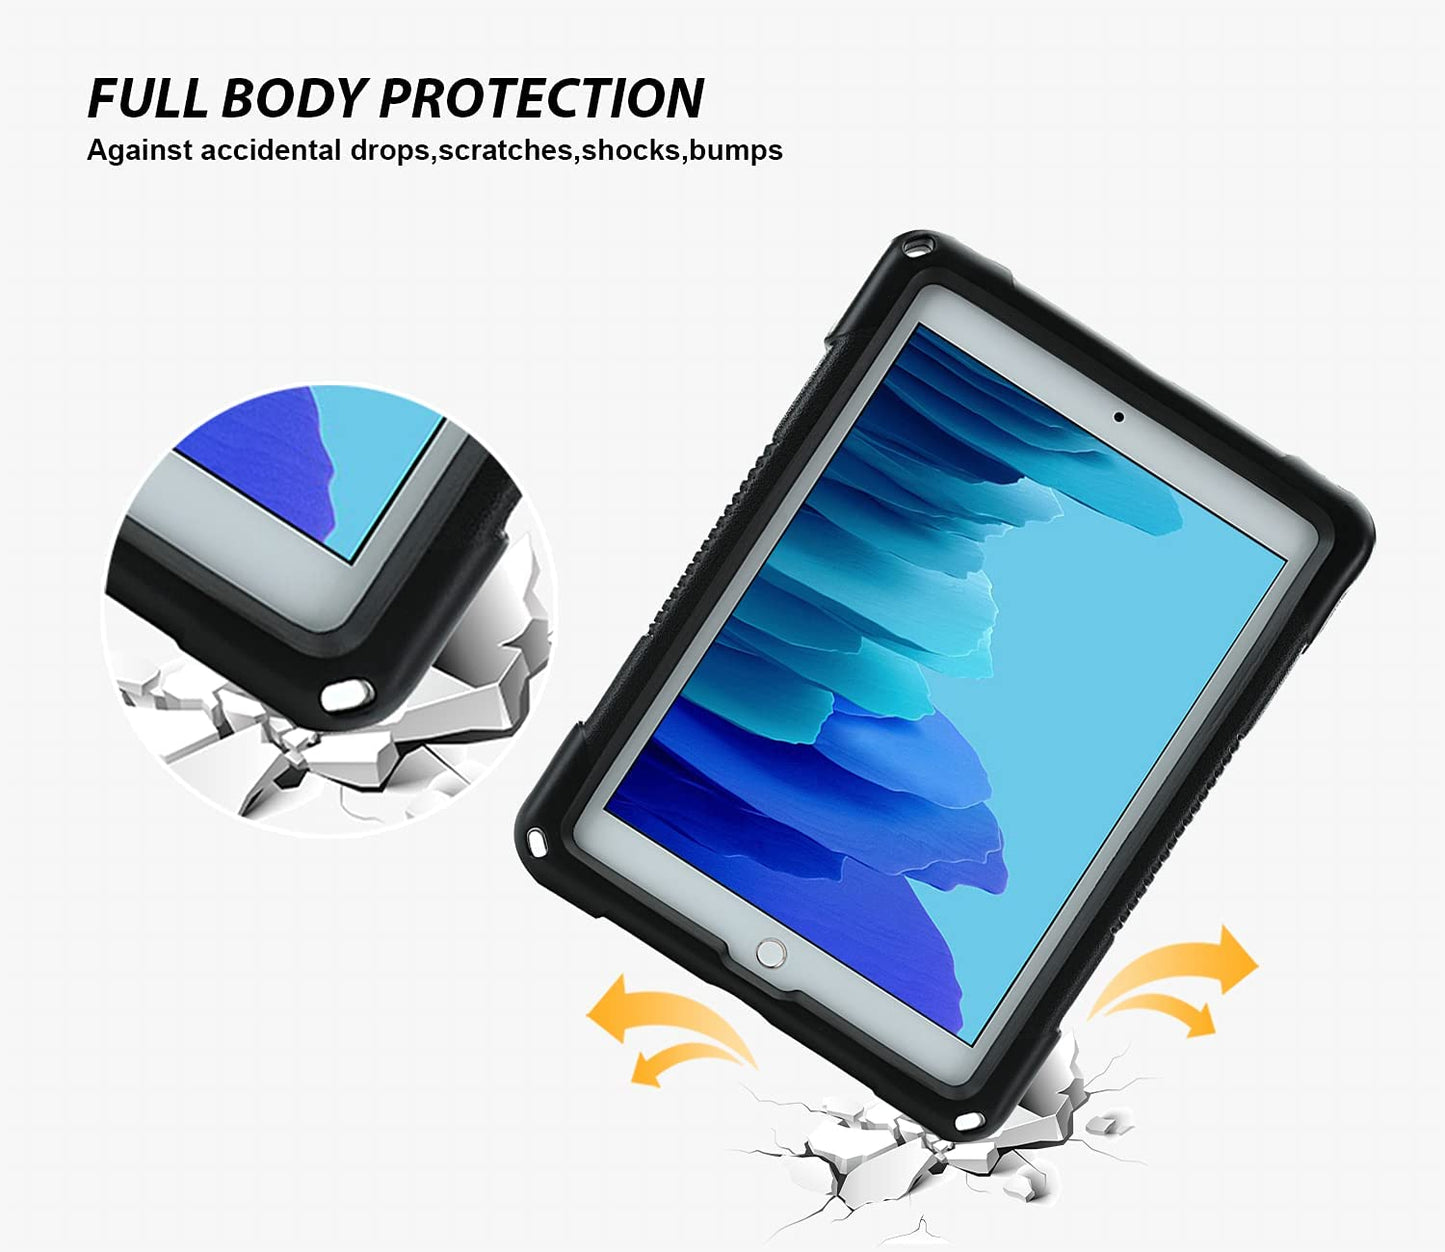 EVA iPad Case 10.2/10.5 inch with 360° Stand Handle Shoulder Strap